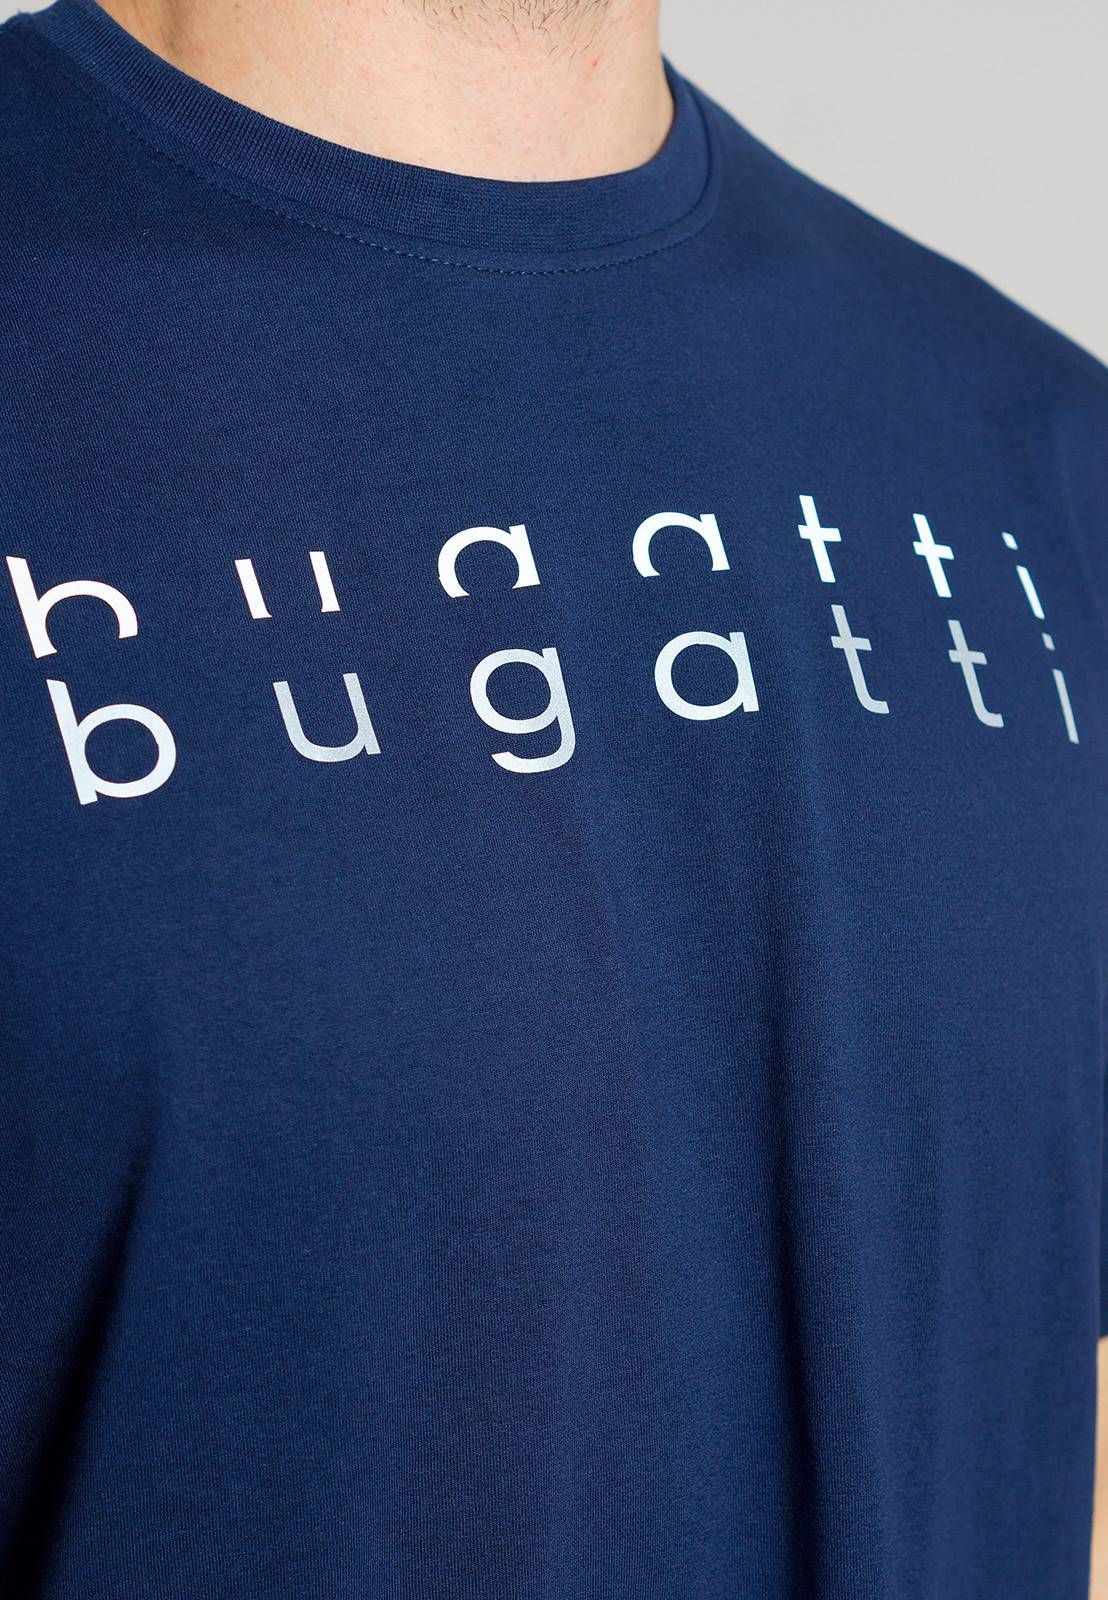 Мужская футболка Bugatti 54069 6074 630 Темно-синий 52